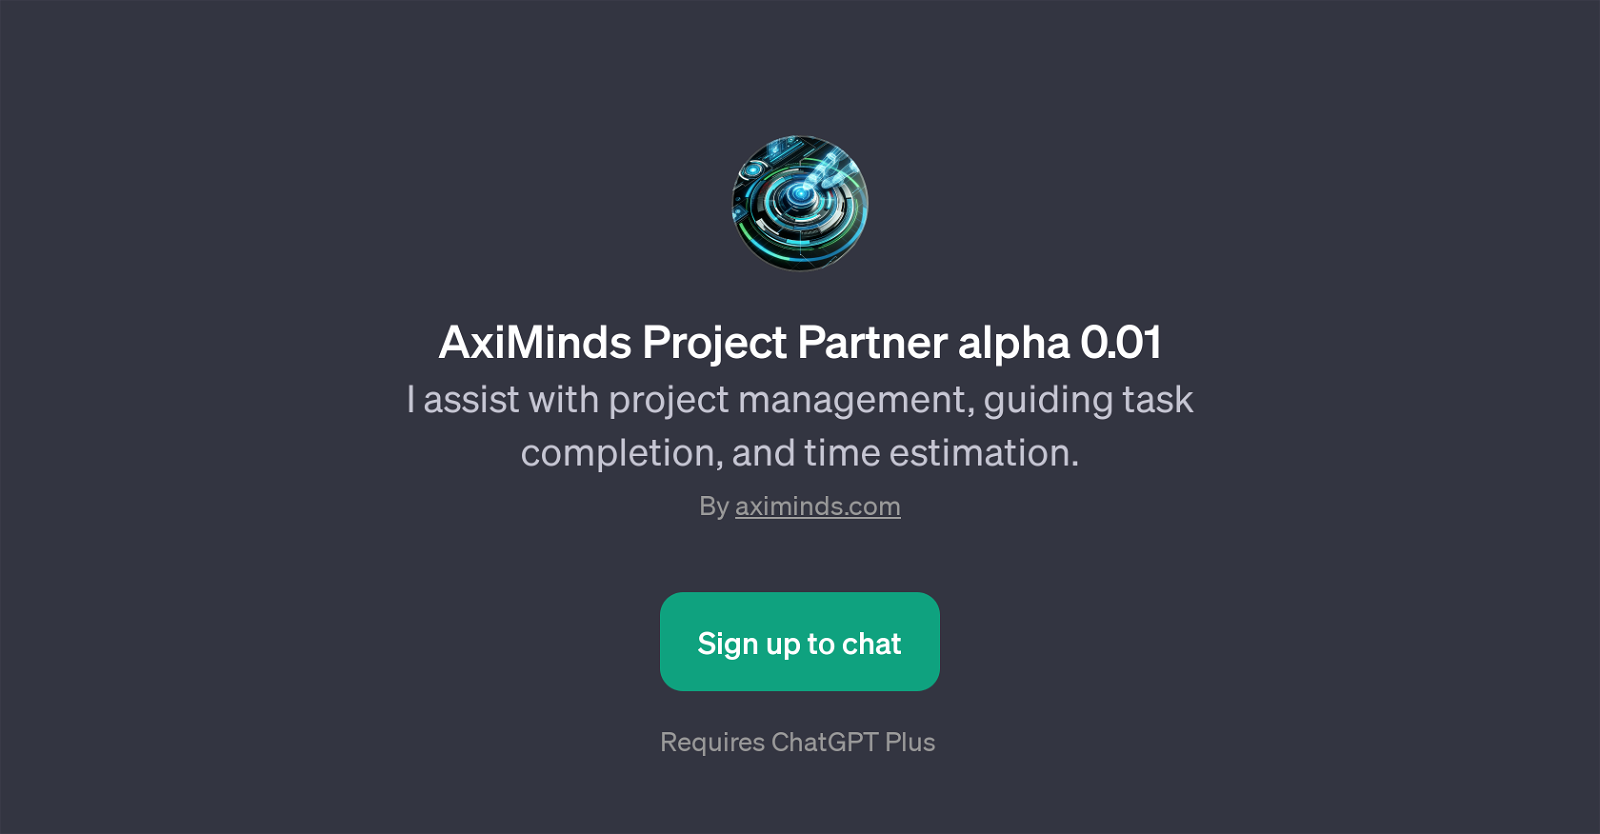 AxiMinds Project Partner alpha 0.01 website